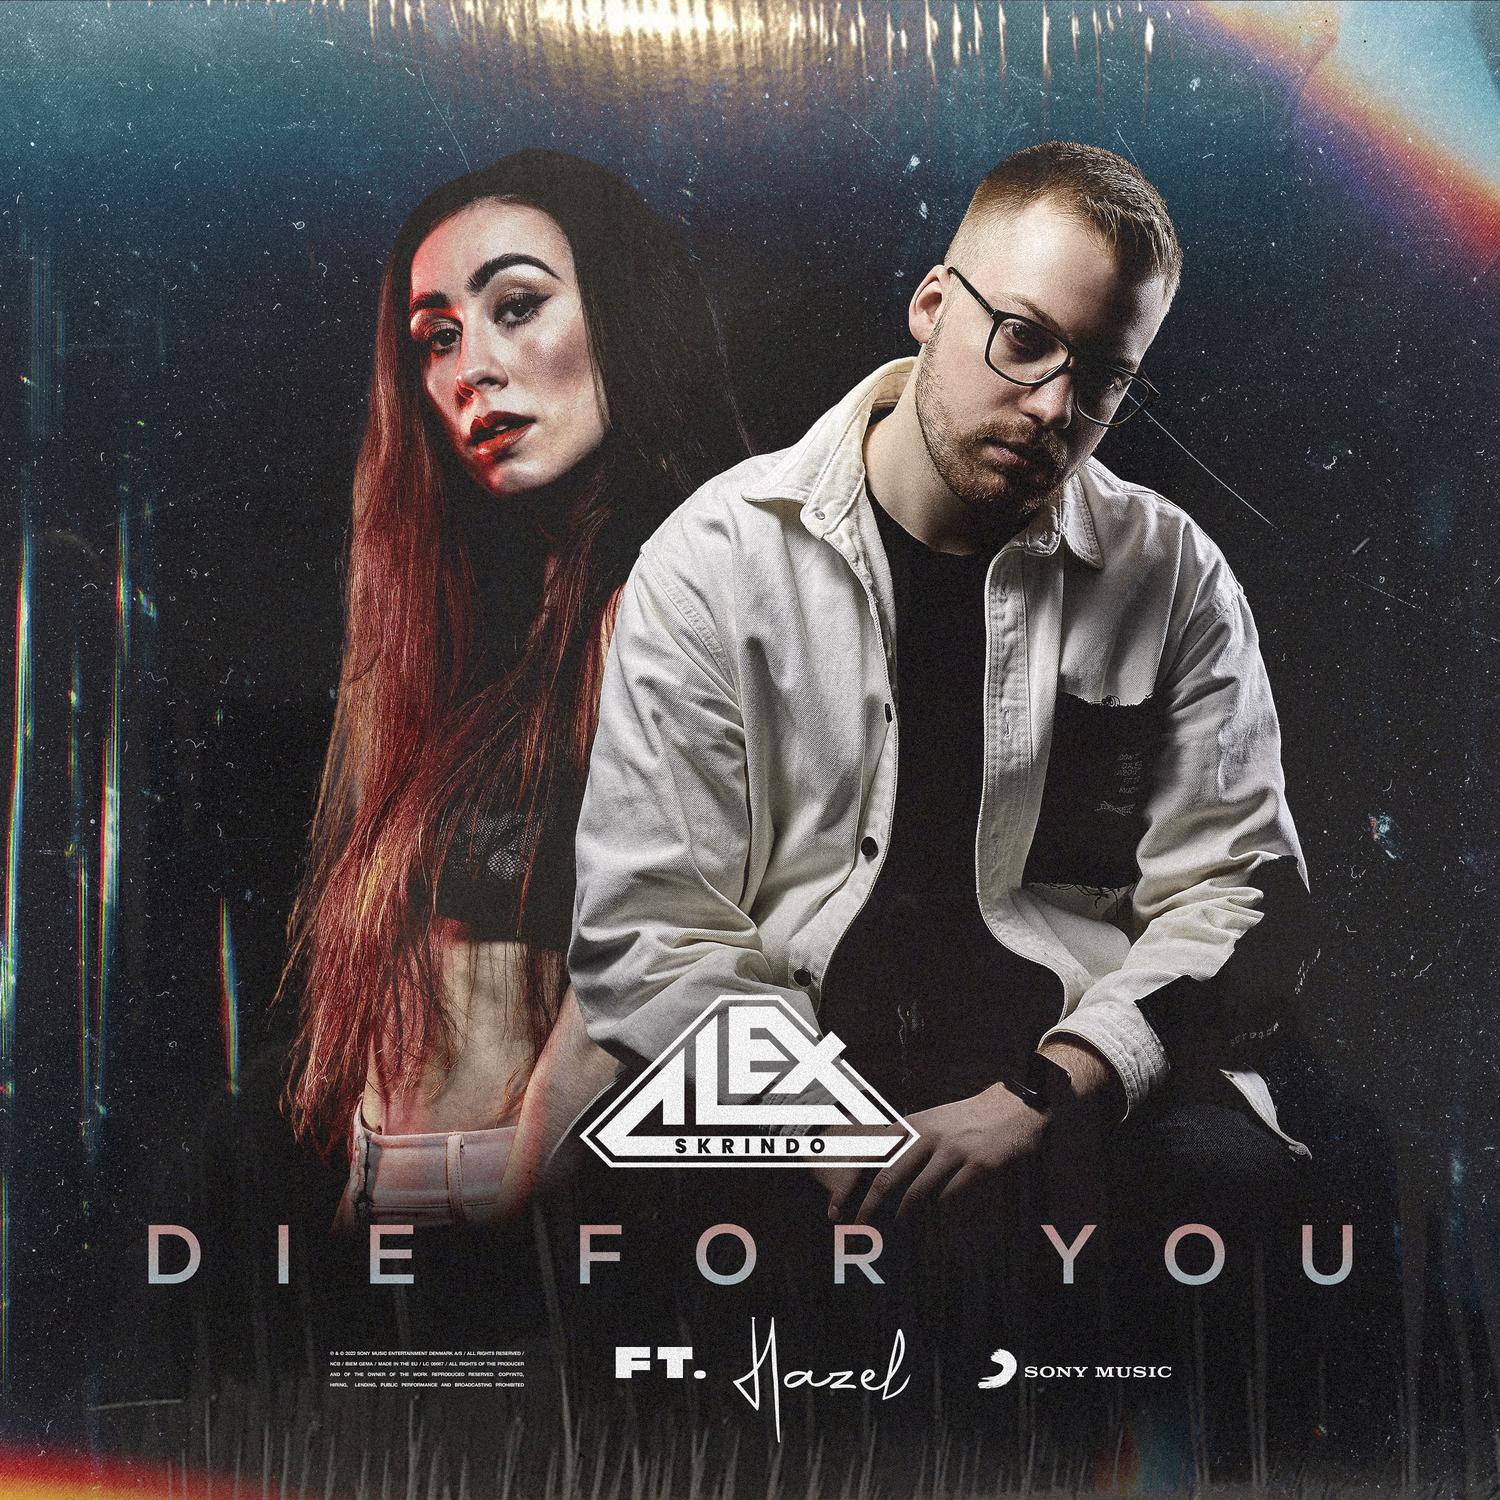 Alex Skrindo - Die for You